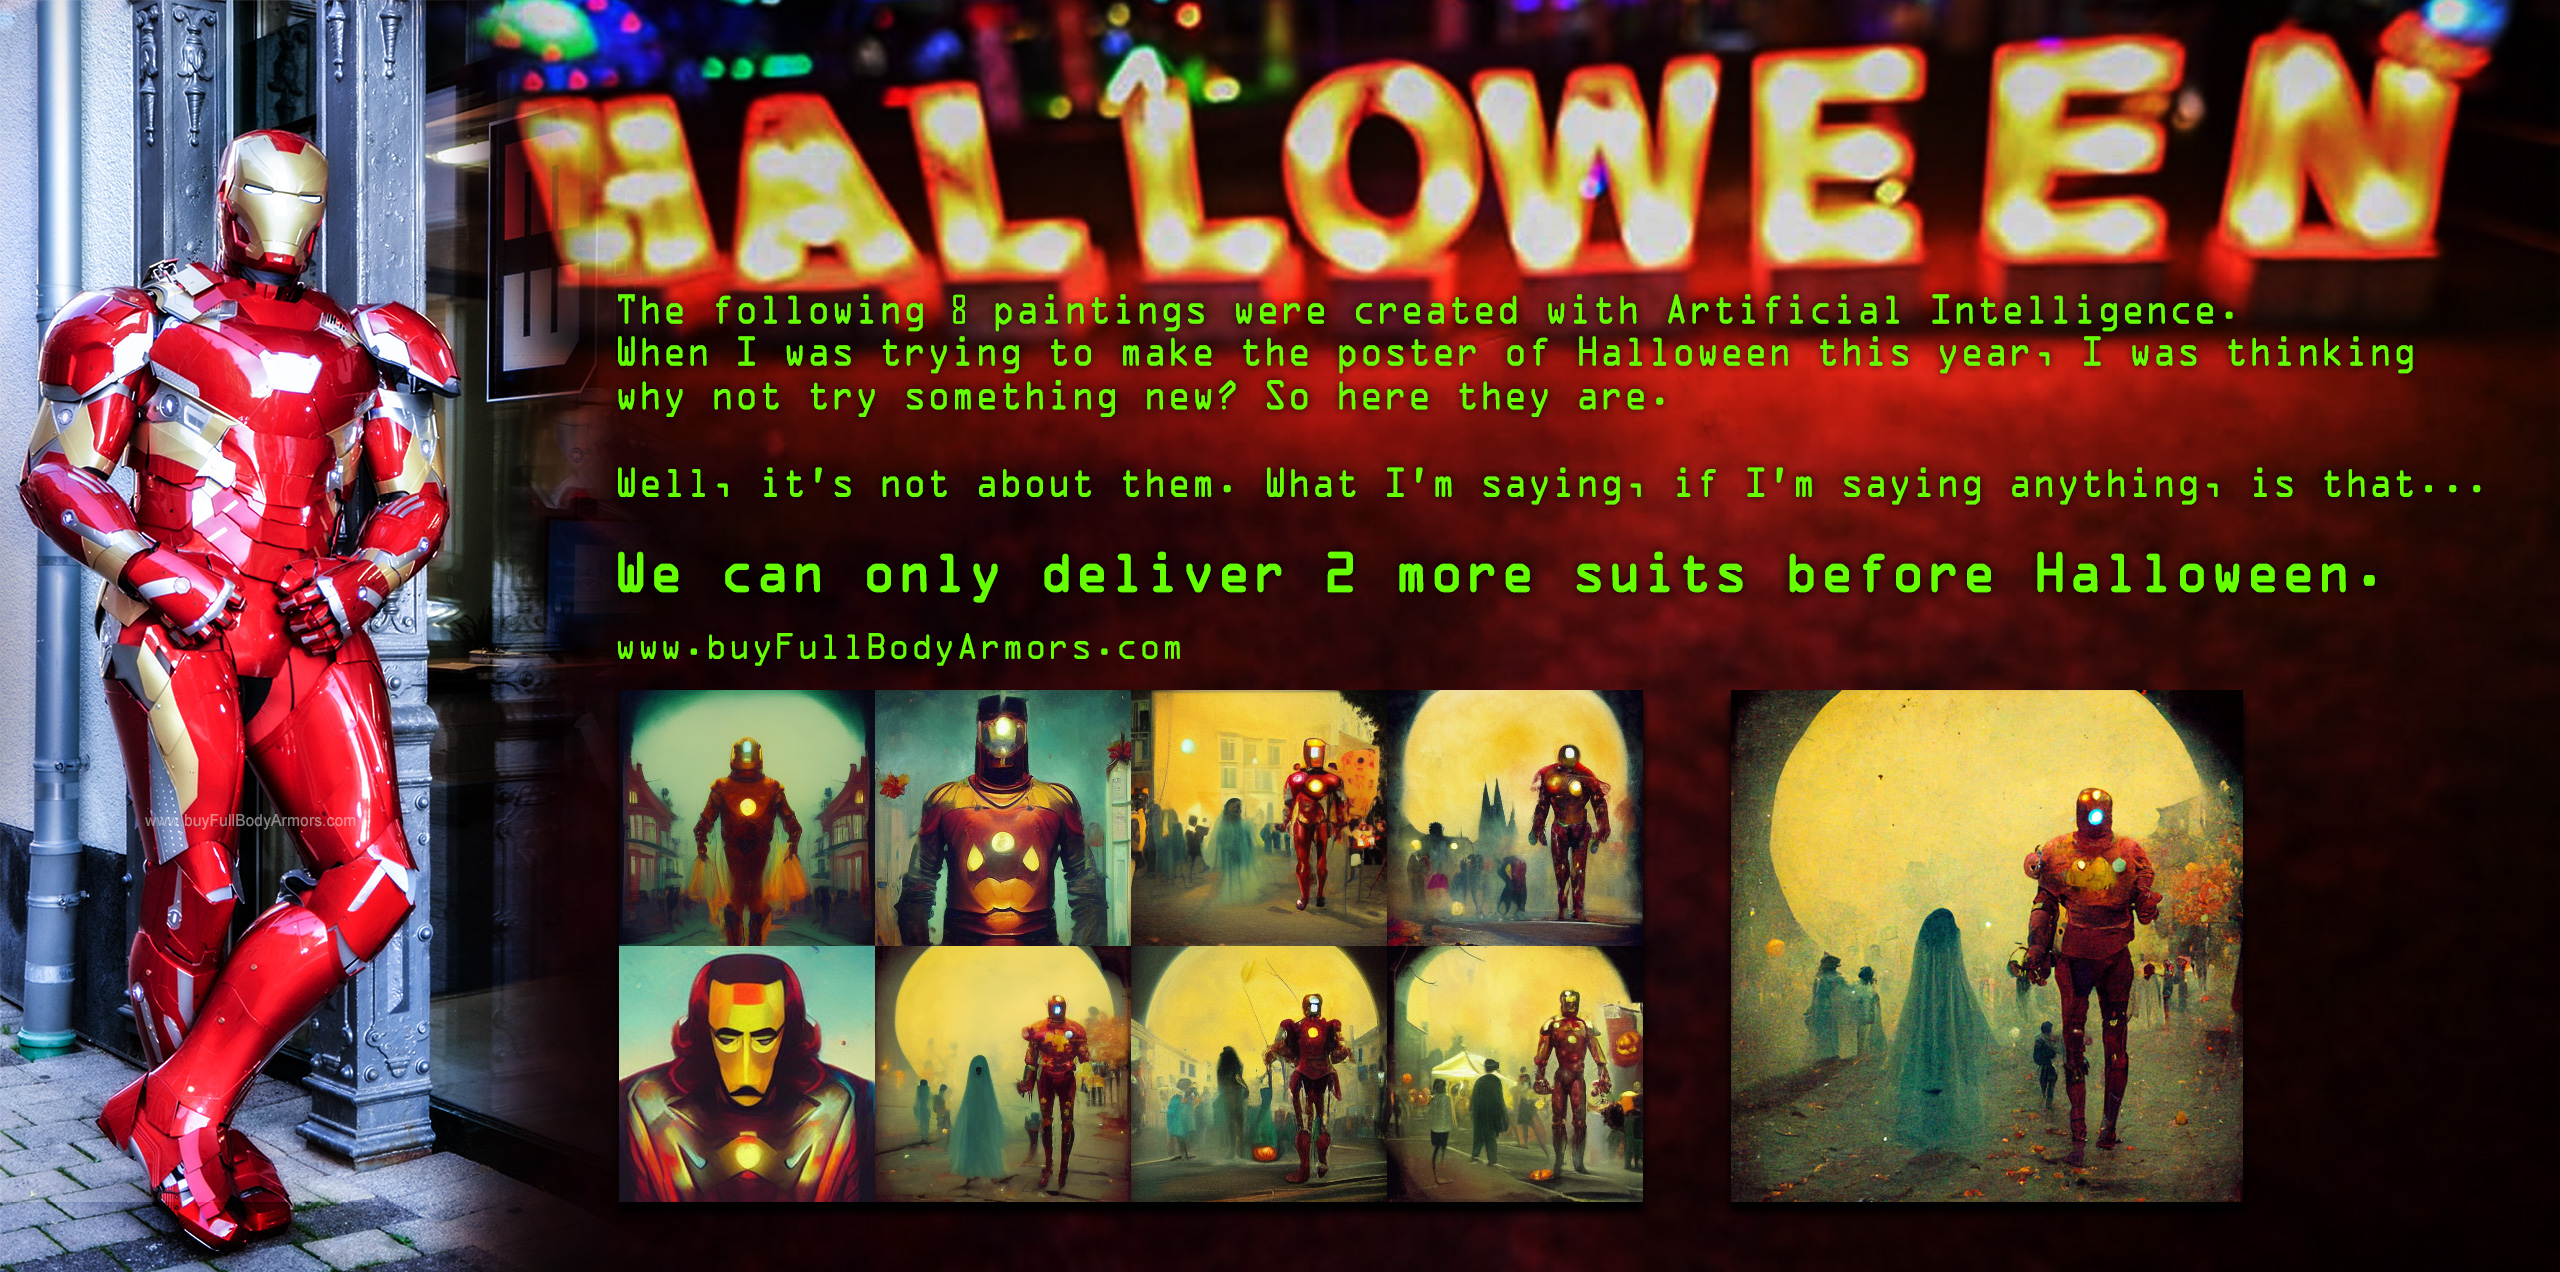 Wearable ironman mark xlvi 46 armor costume suit halloween 20220920